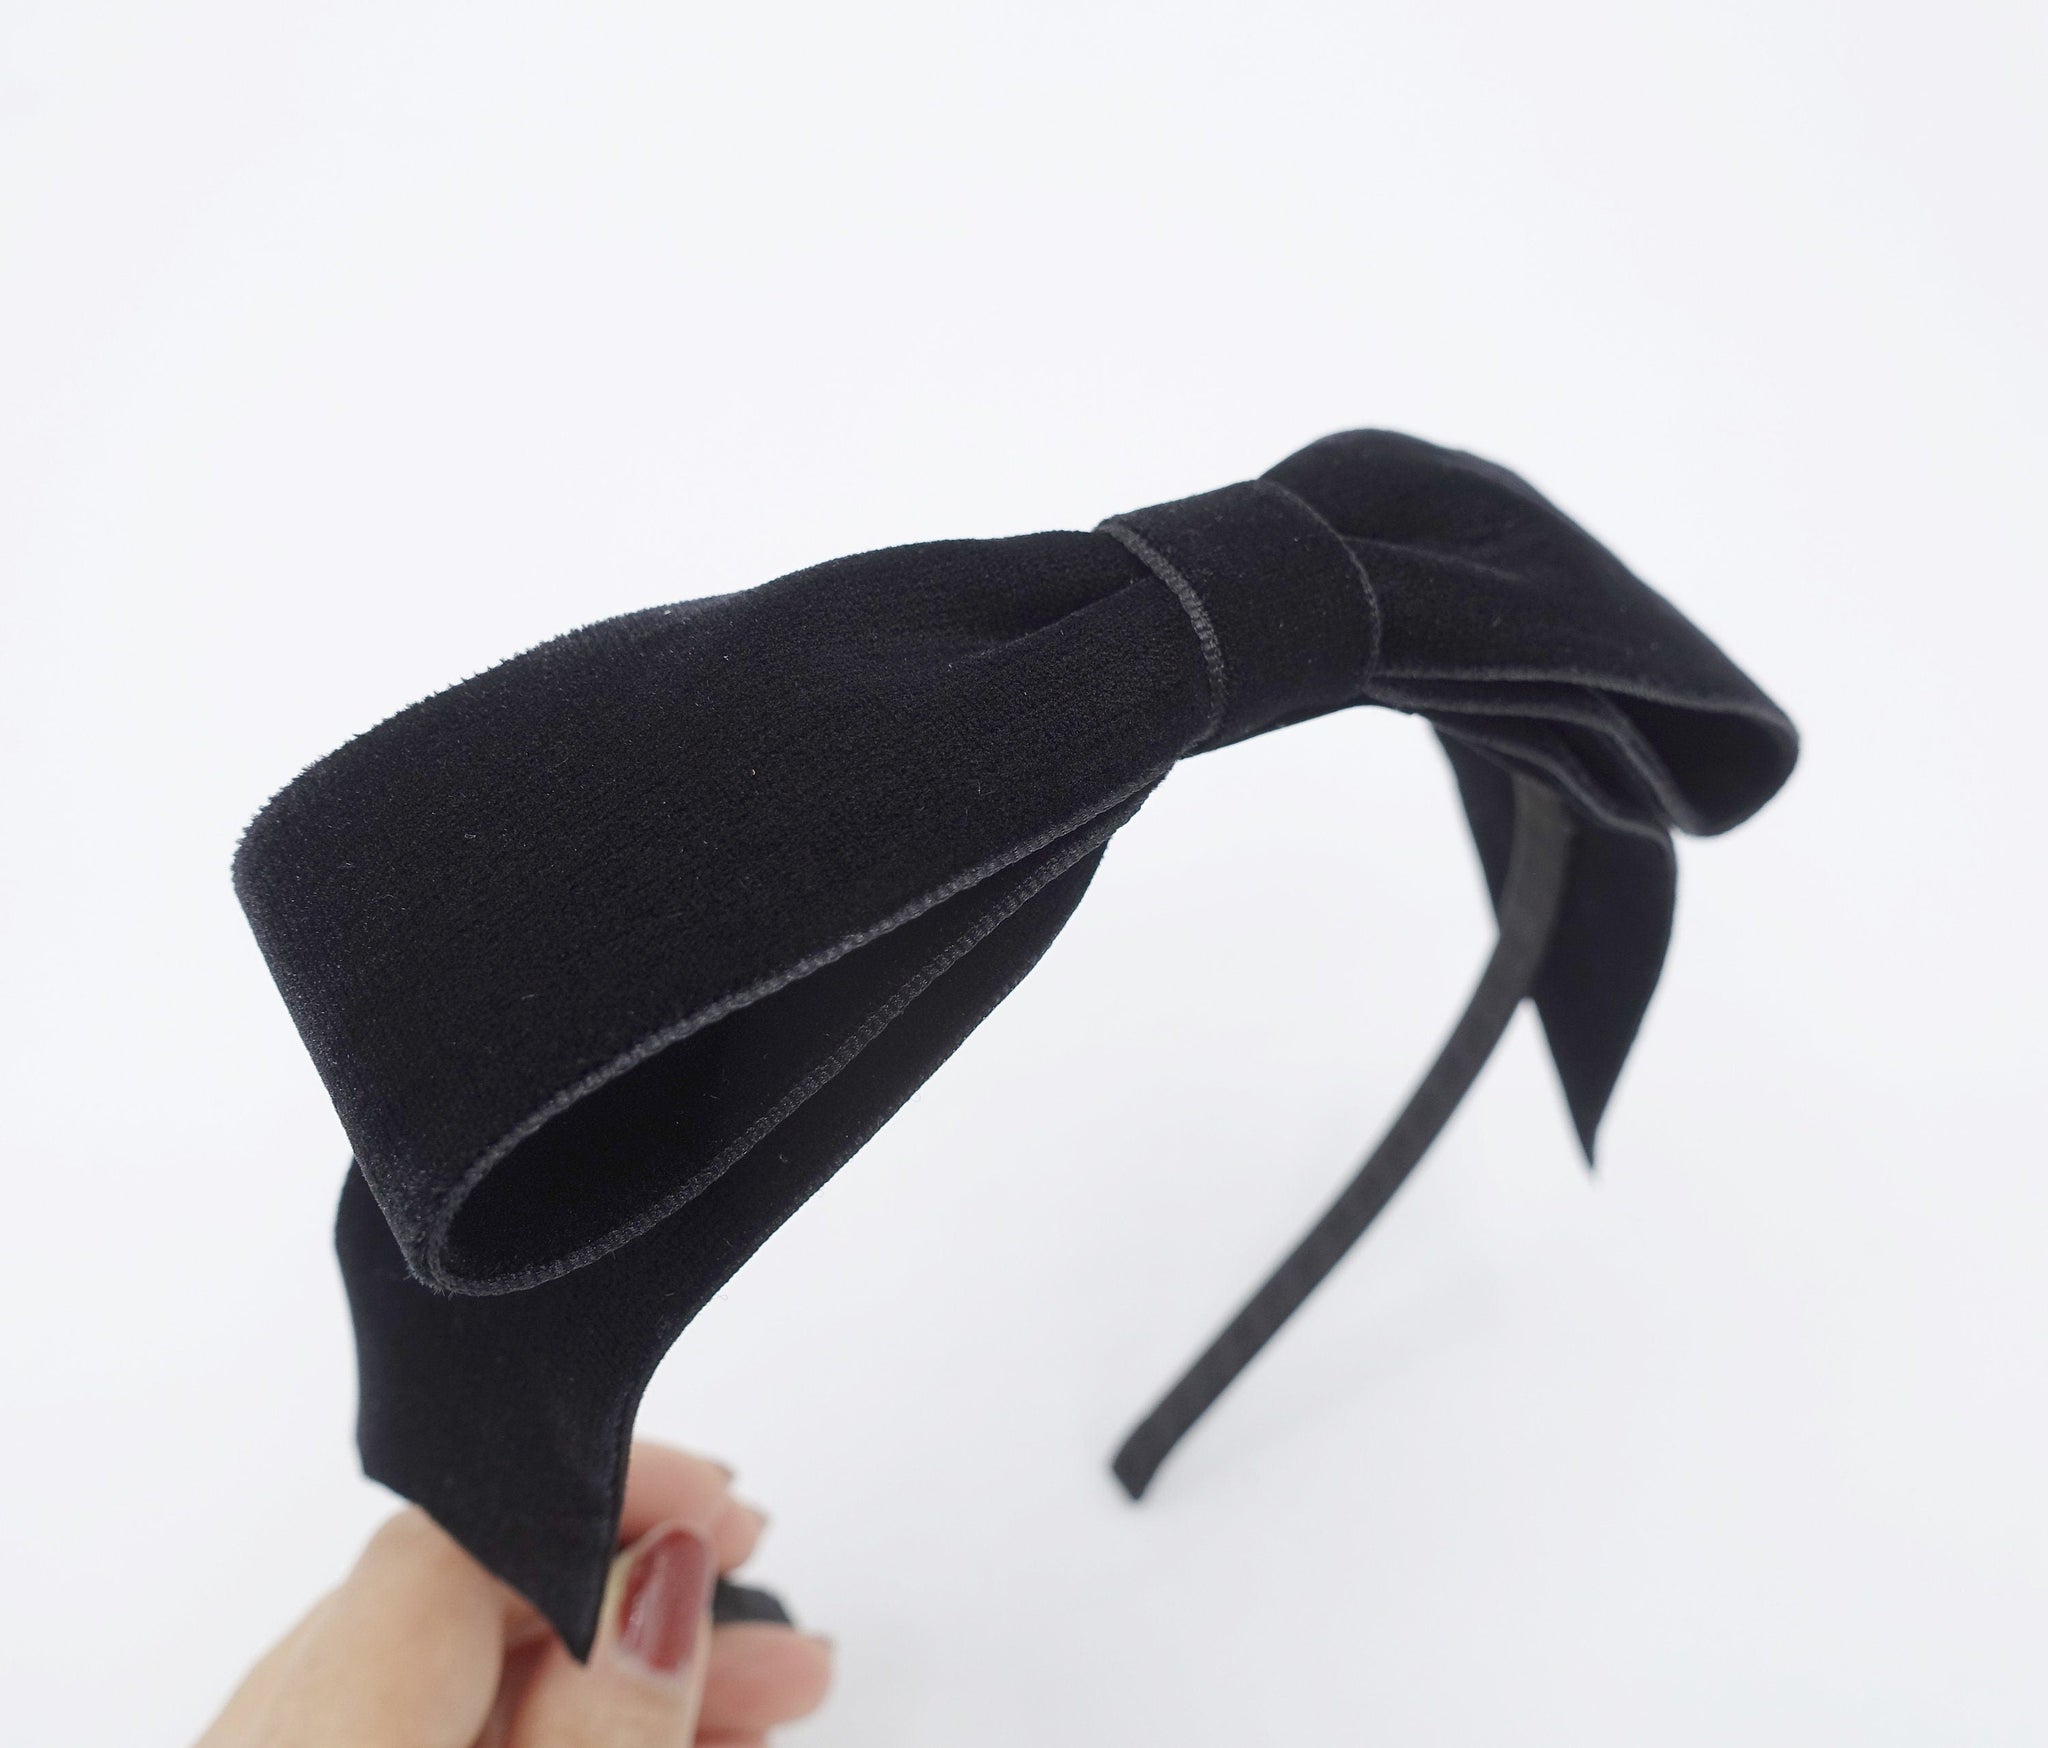 veryshine.com Barrette (Bow) black velvet hair bow headband VeryShine retro hair accessory for women